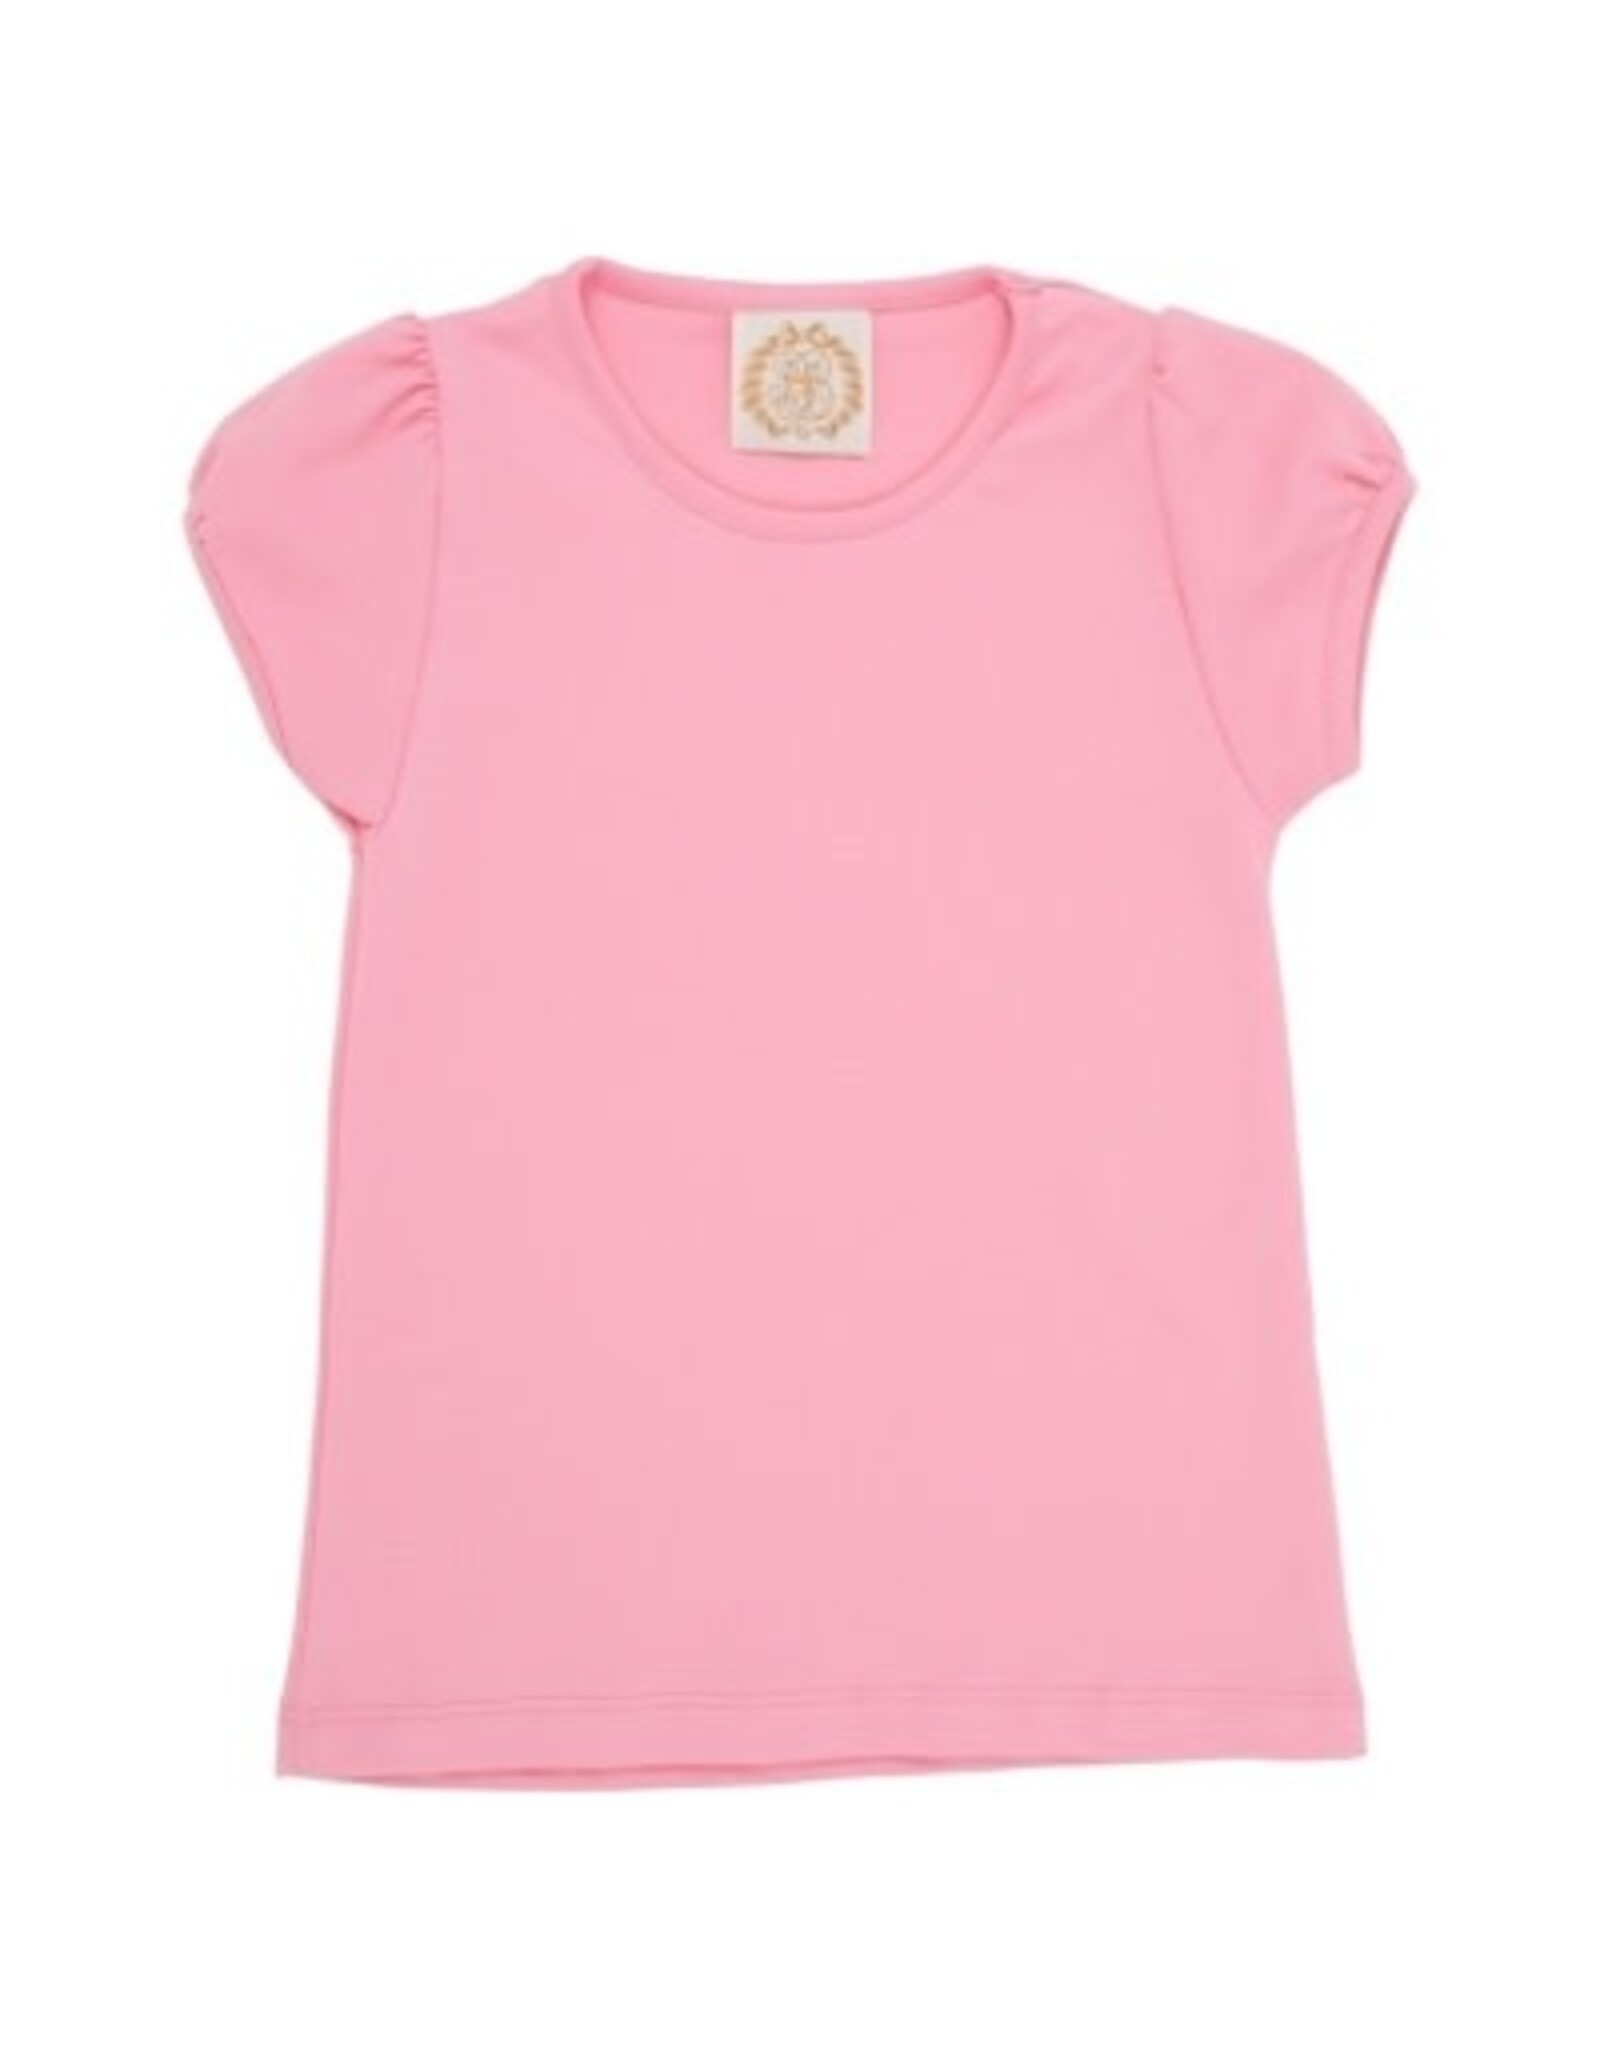 The Beaufort Bonnet Company Penny's Play Shirt Hamptons Hot Pink